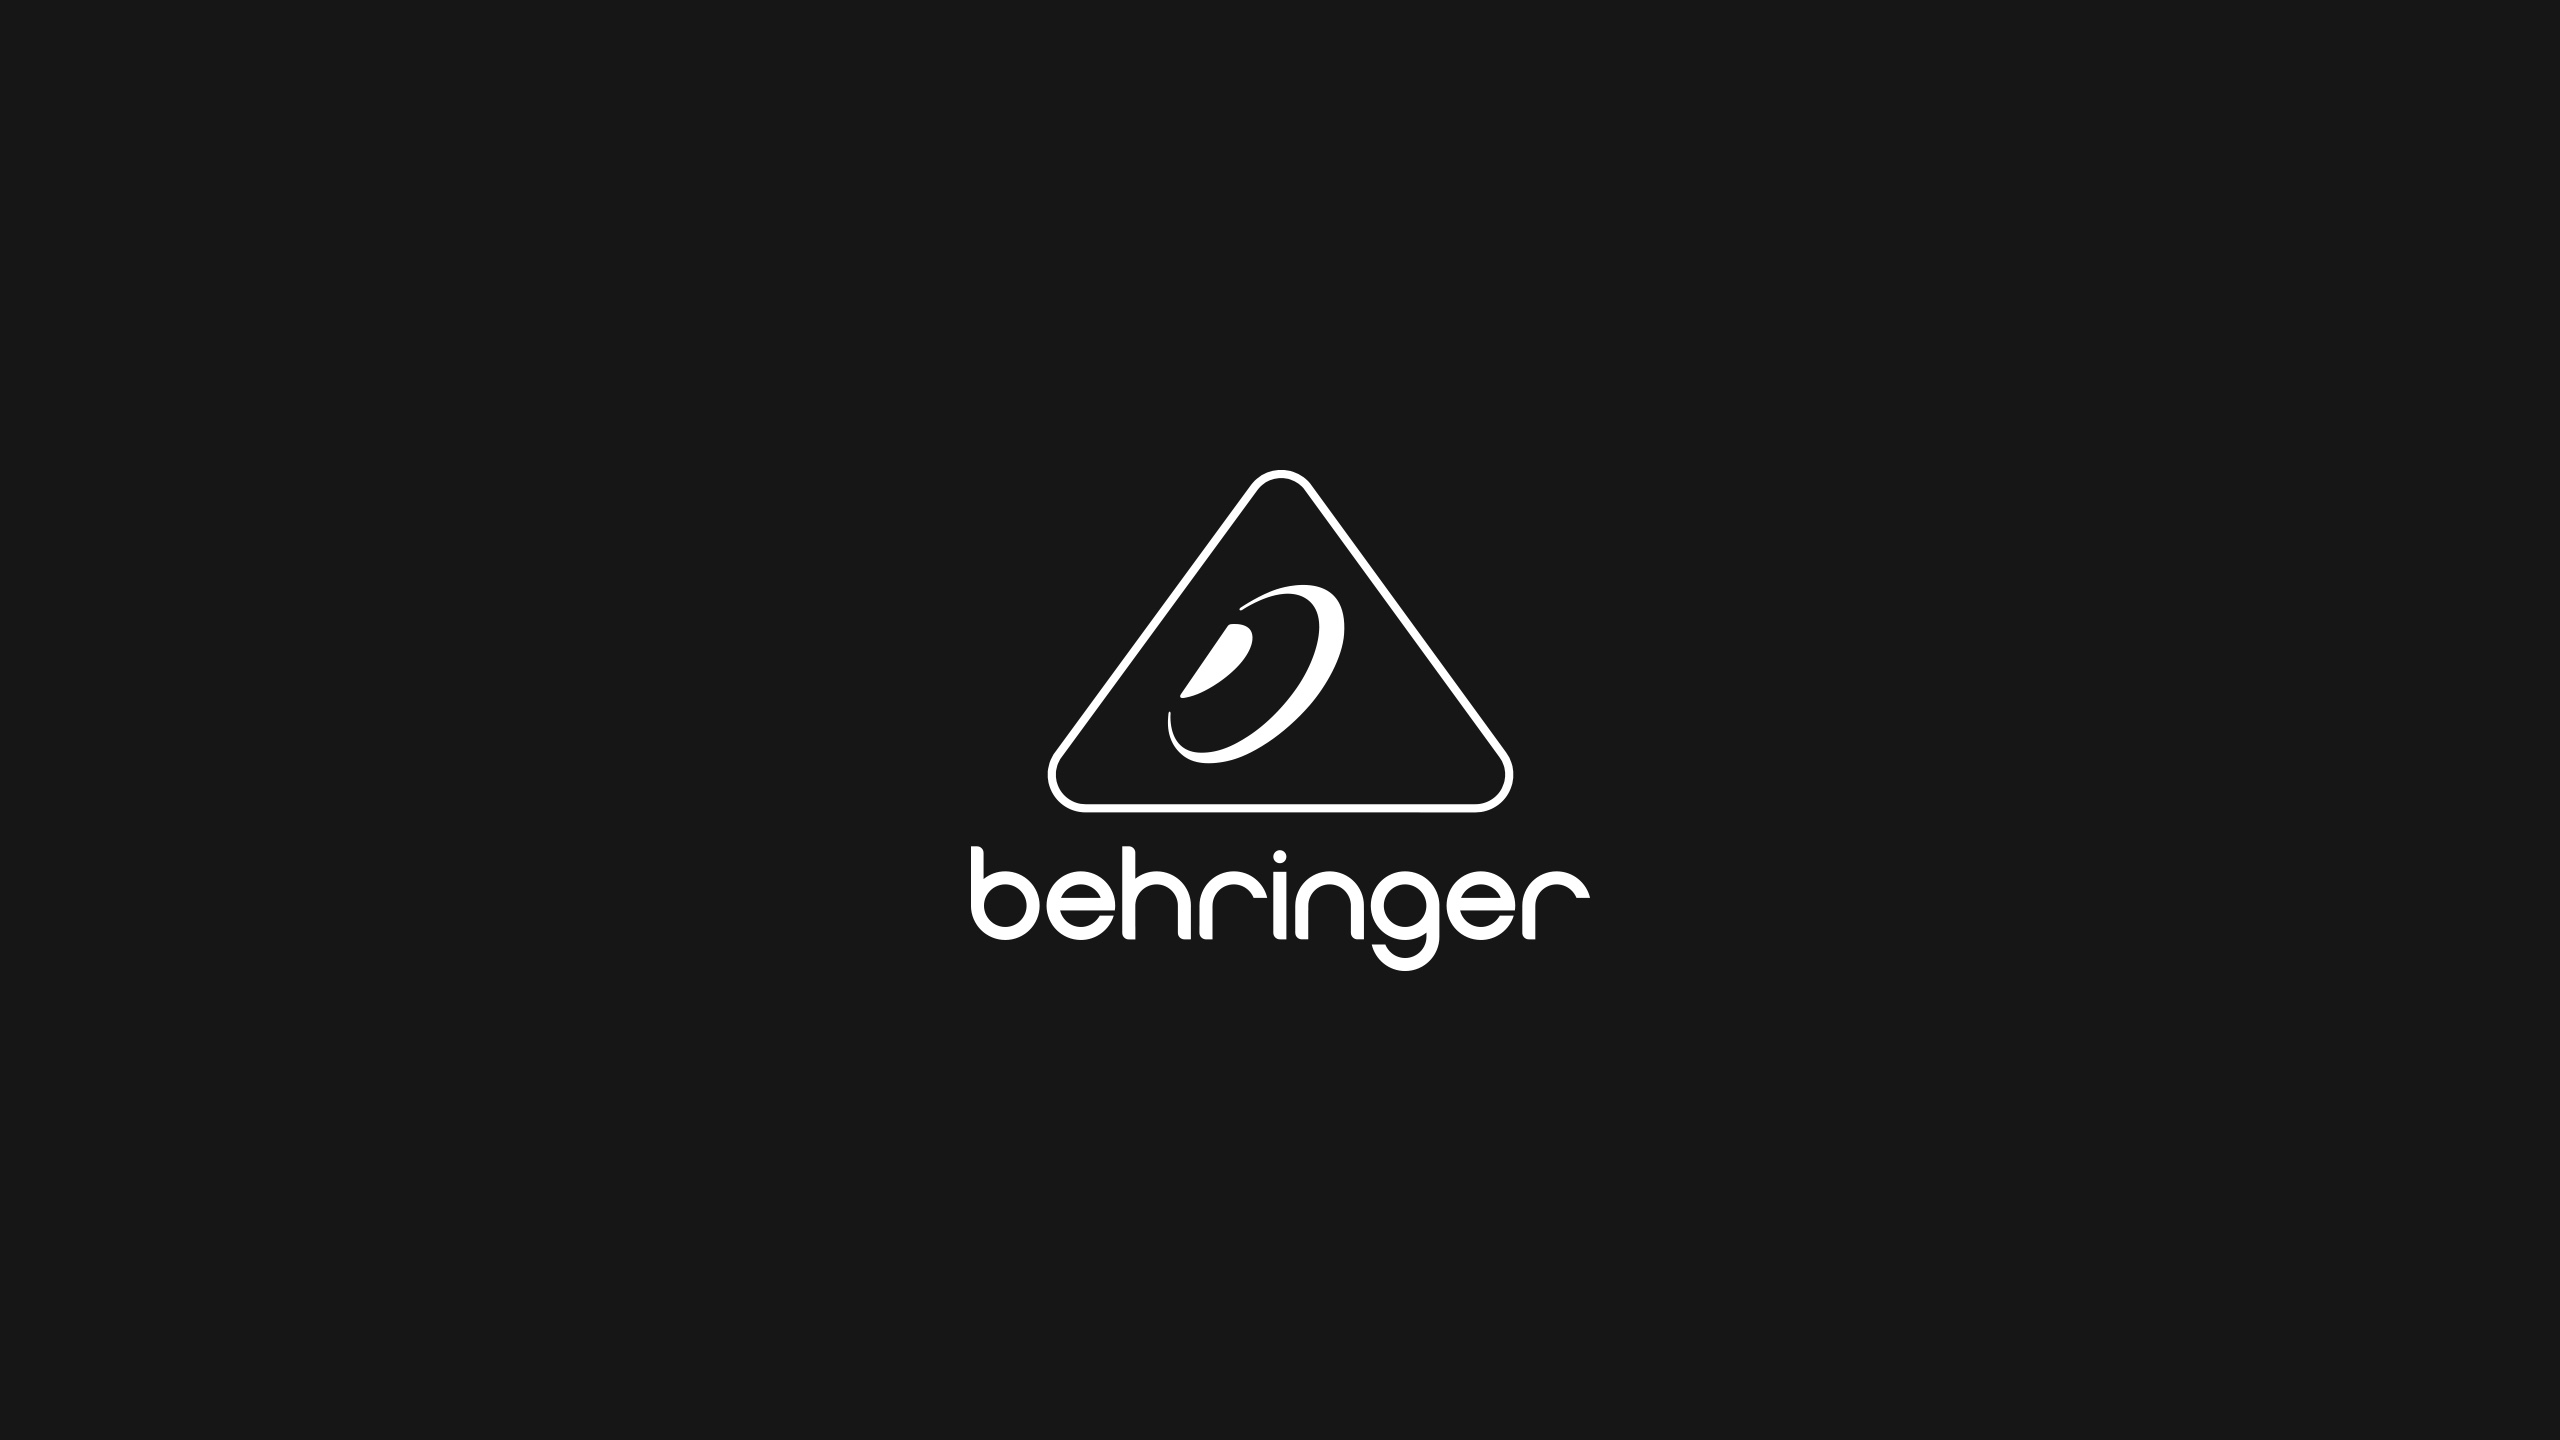 General 2560x1440 audio music sound speakers headphones Behringer black background simple background logo